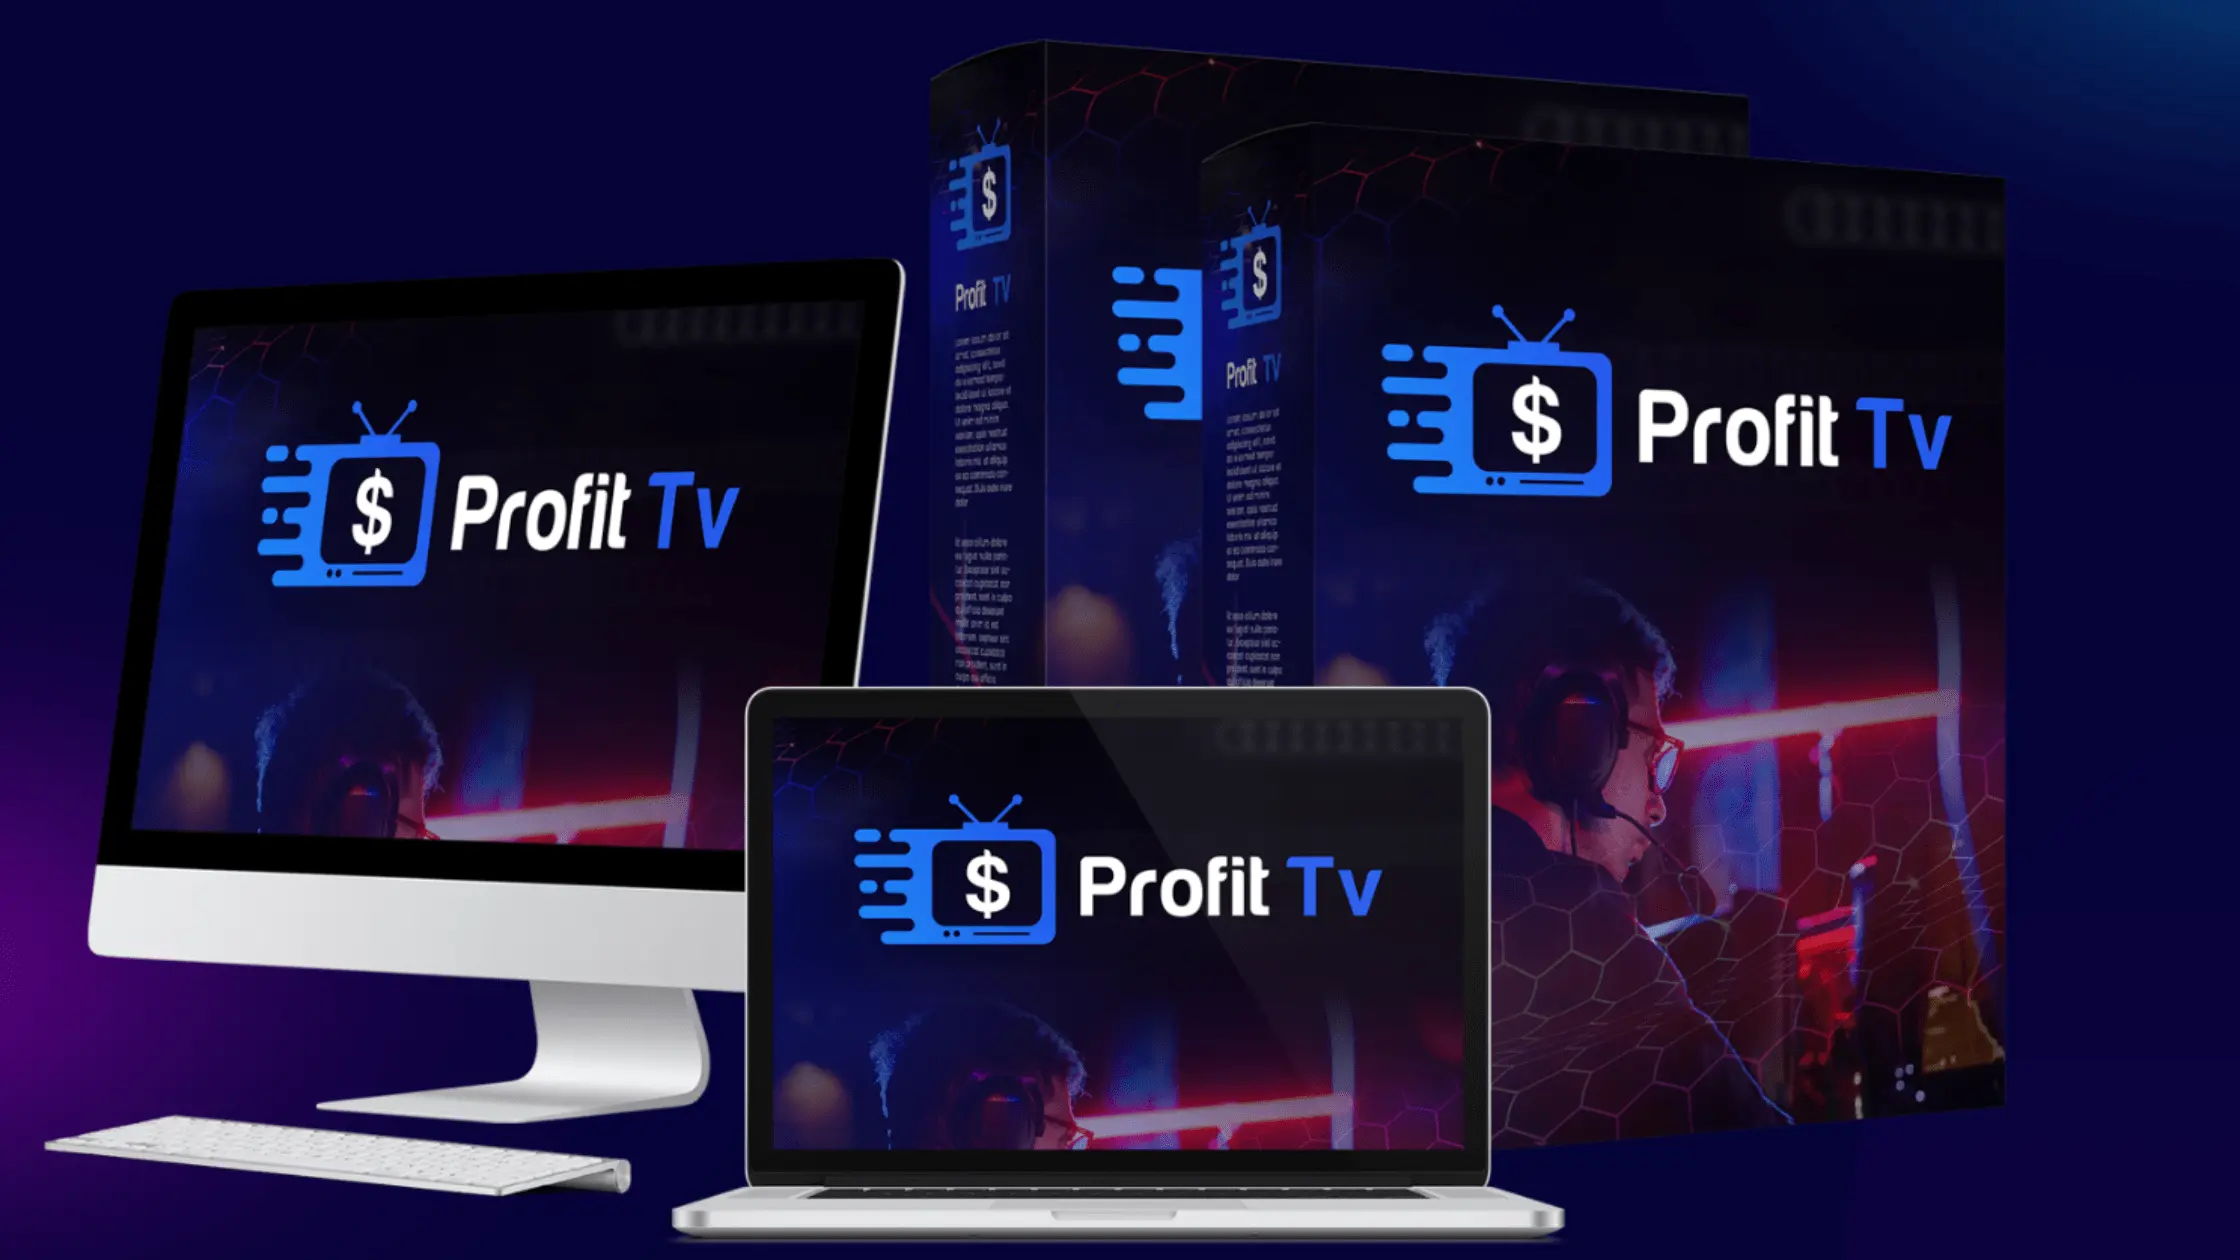 ProfitTV Review